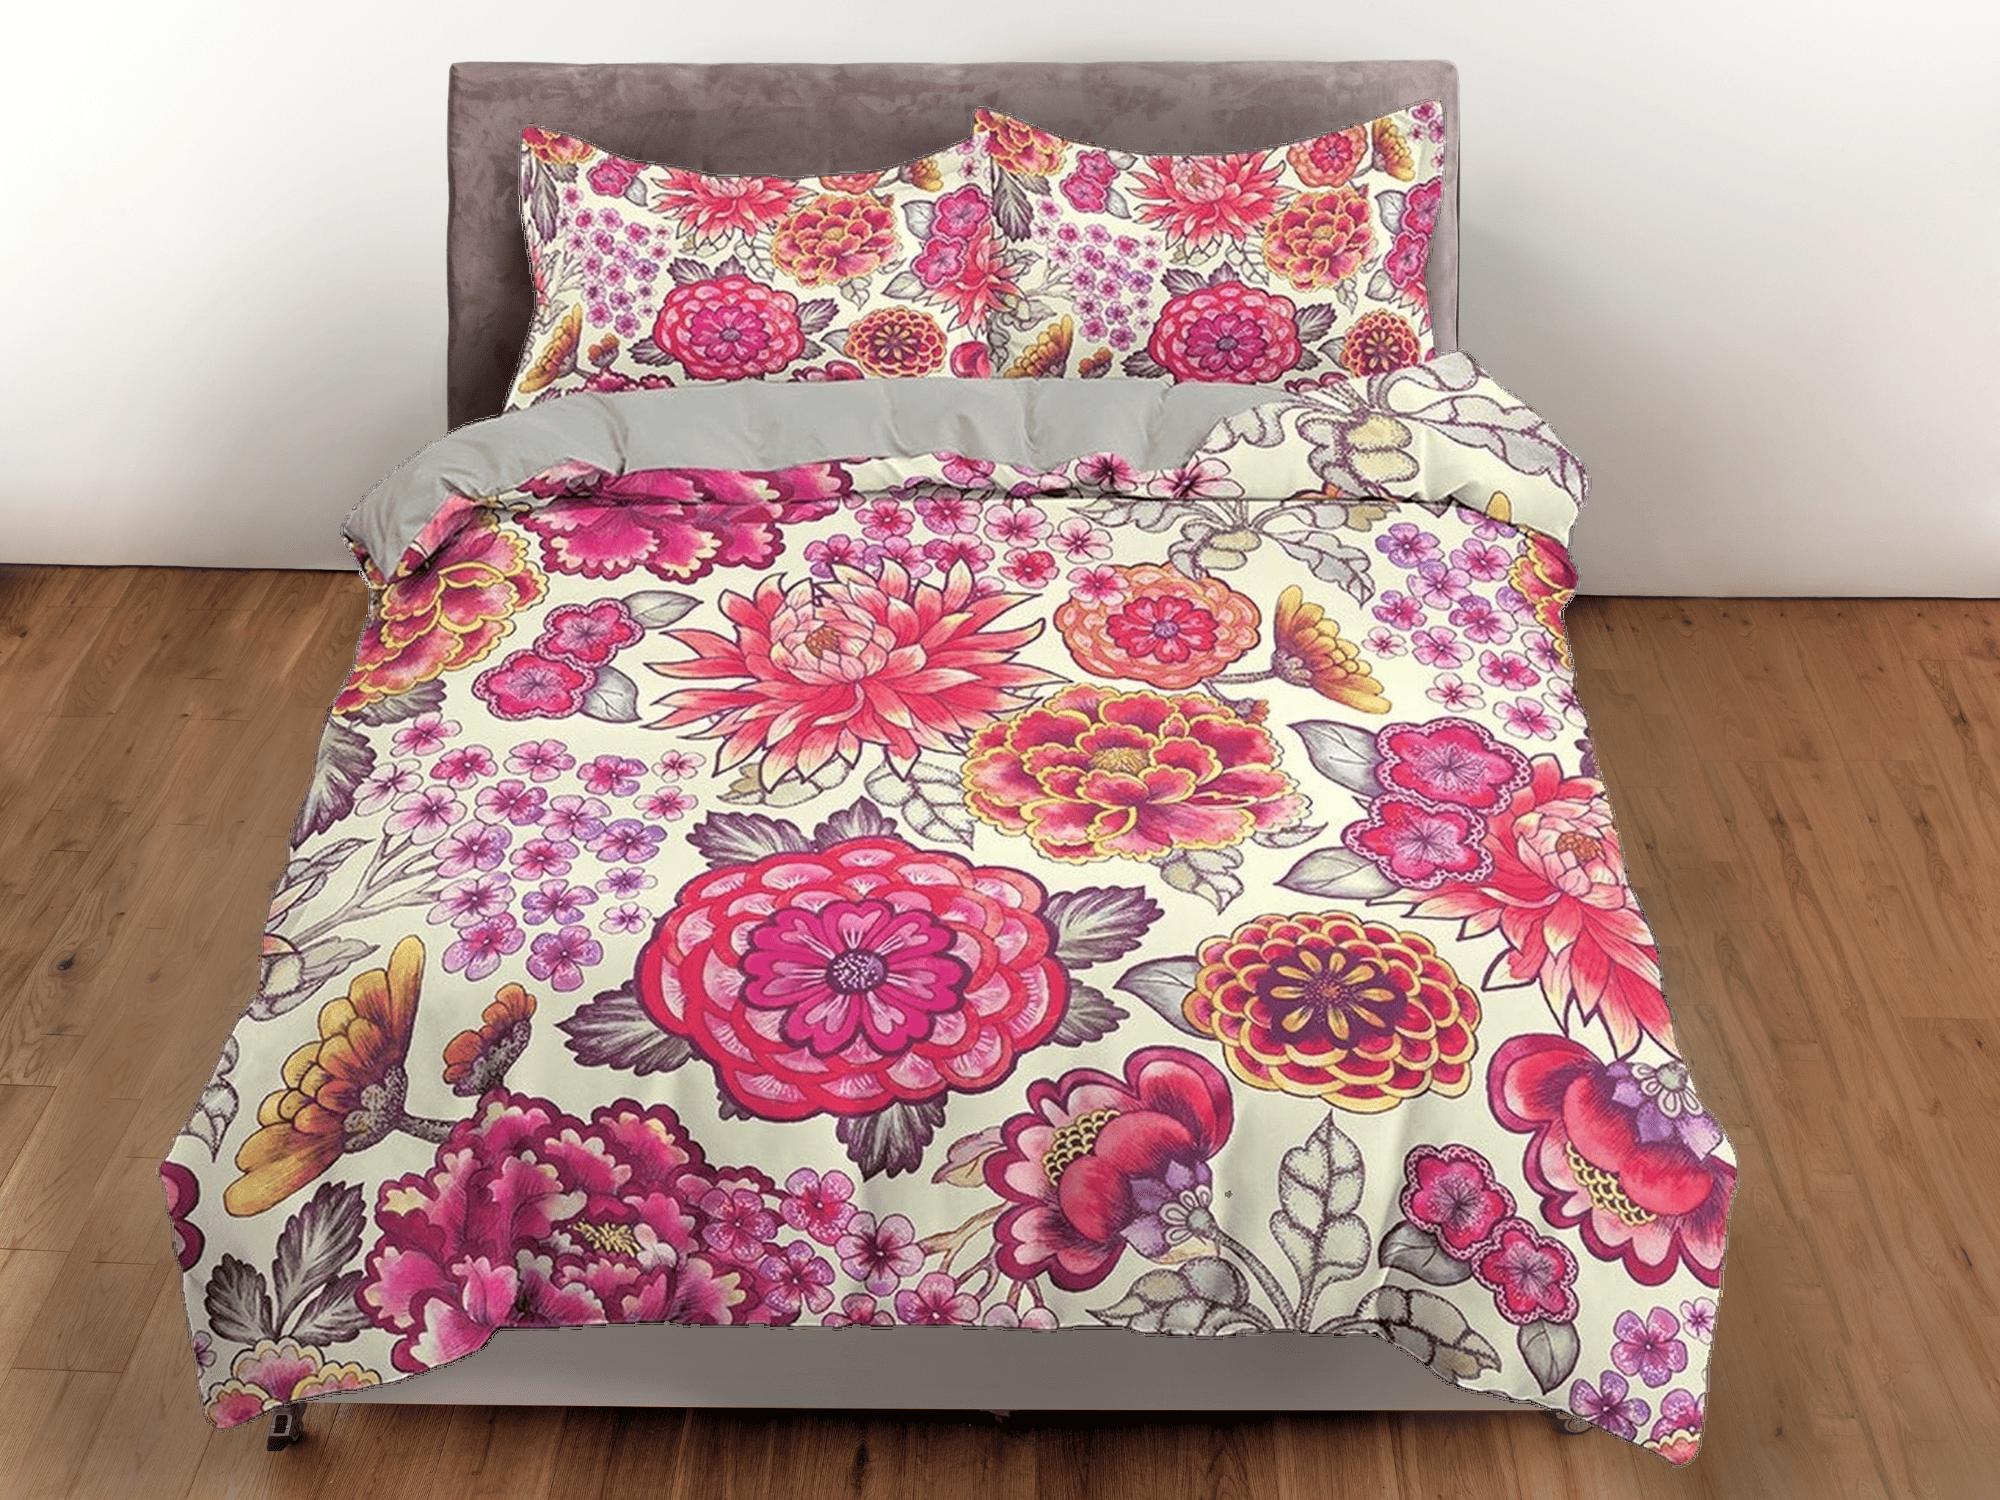 daintyduvet Pink dahlia floral duvet cover colorful bedding, teen girl bedroom, baby girl crib bedding boho maximalist bedspread aesthetic bedding